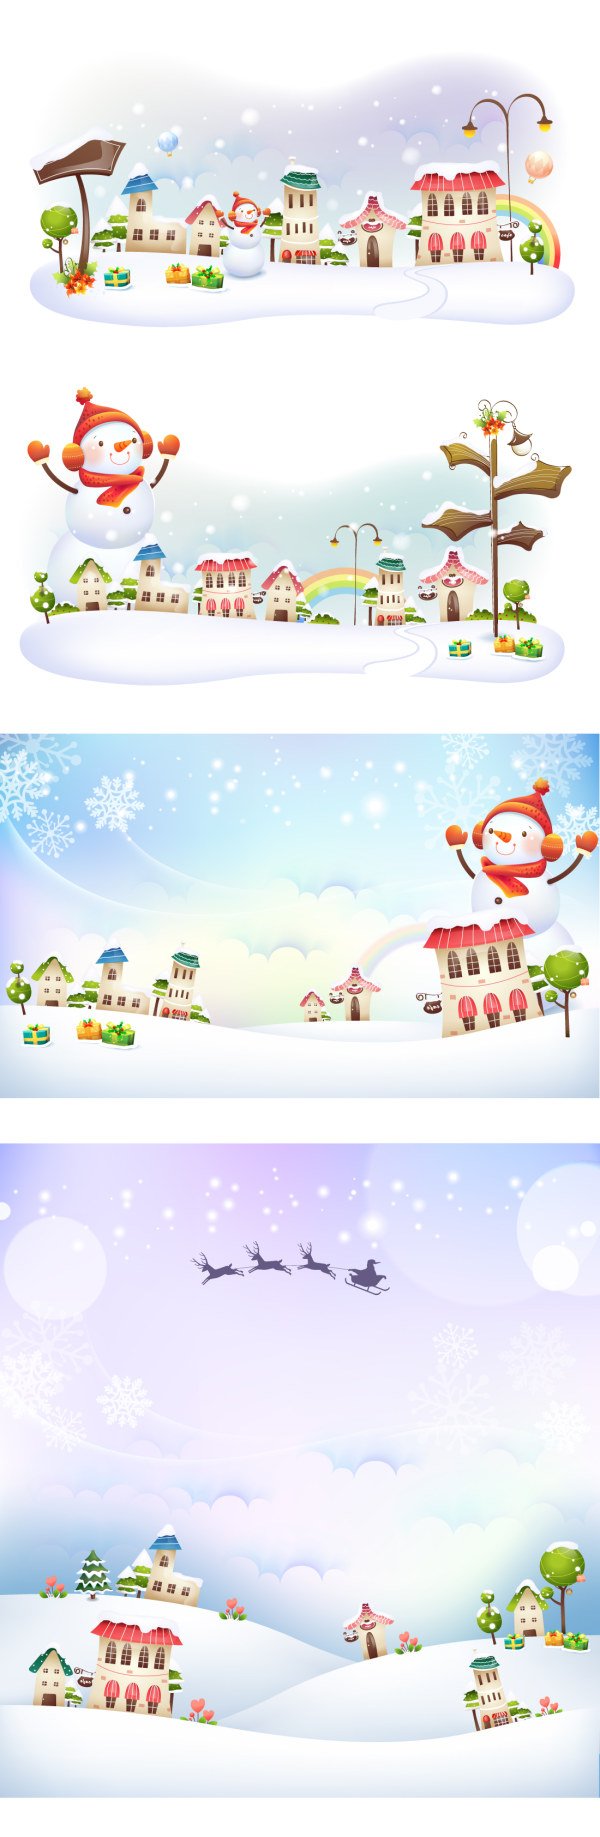 Christmas Snow Globe Illustration Material